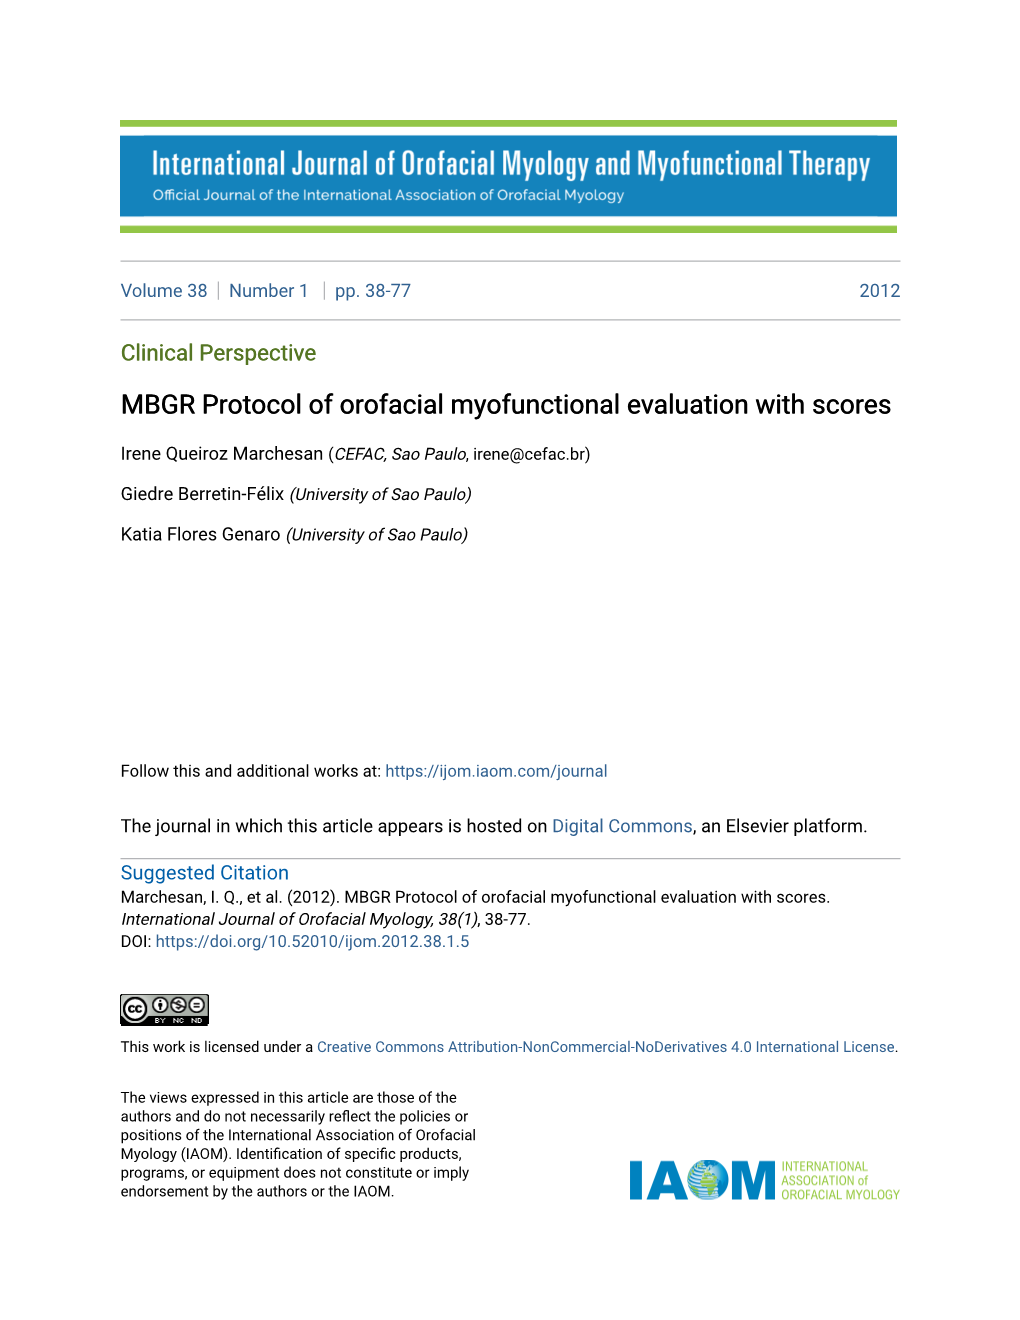 MBGR Protocol of Orofacial Myofunctional Evaluation with Scores